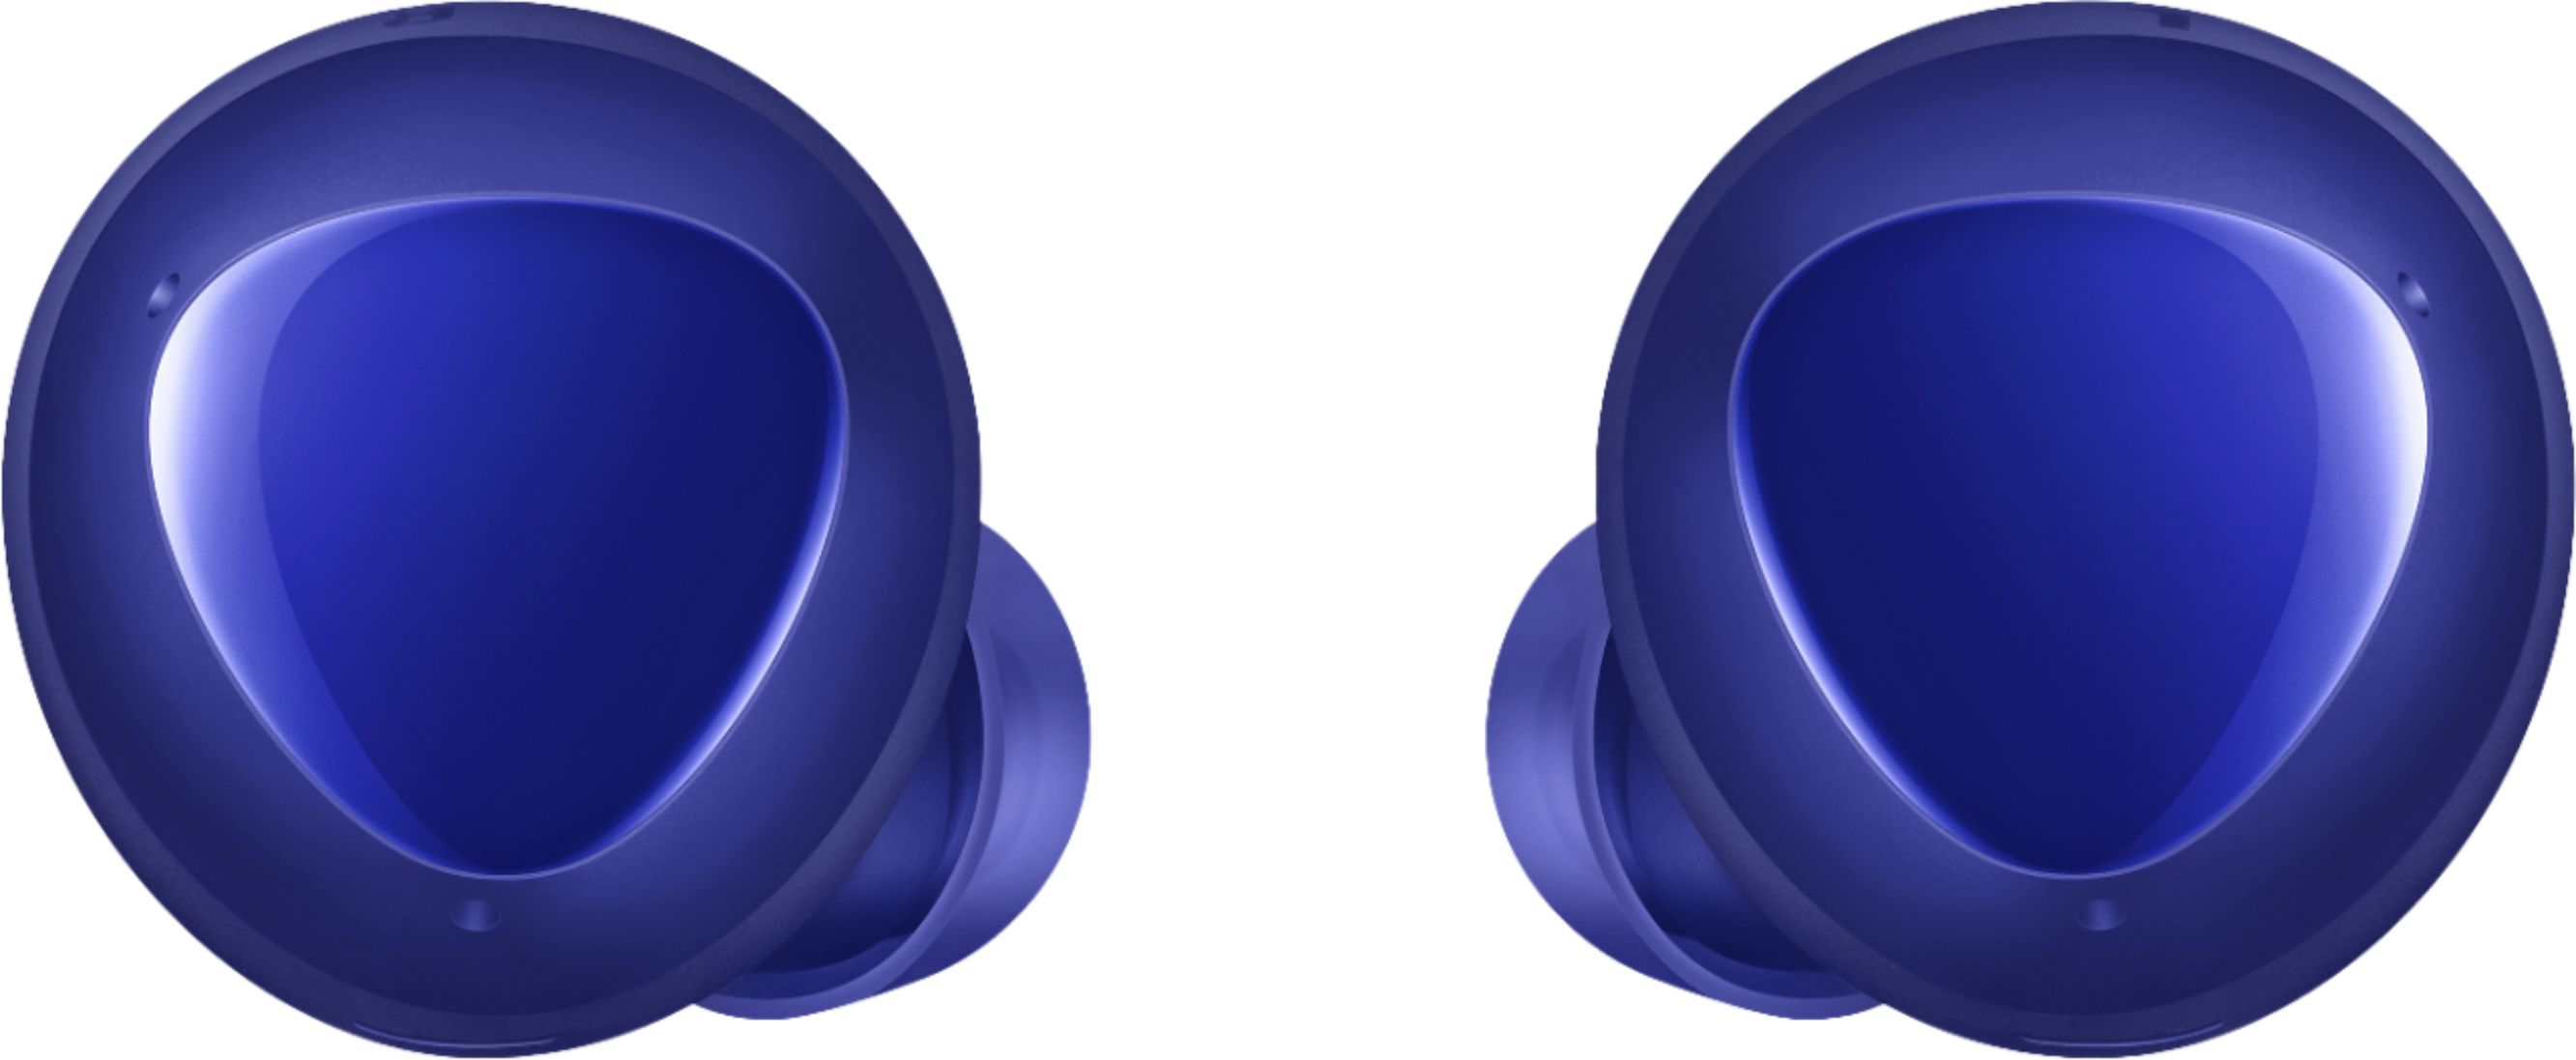 Samsung - Geek Squad Certified Refurbished Galaxy Buds+ True Wireless Earbud Headphones - Aura Blue